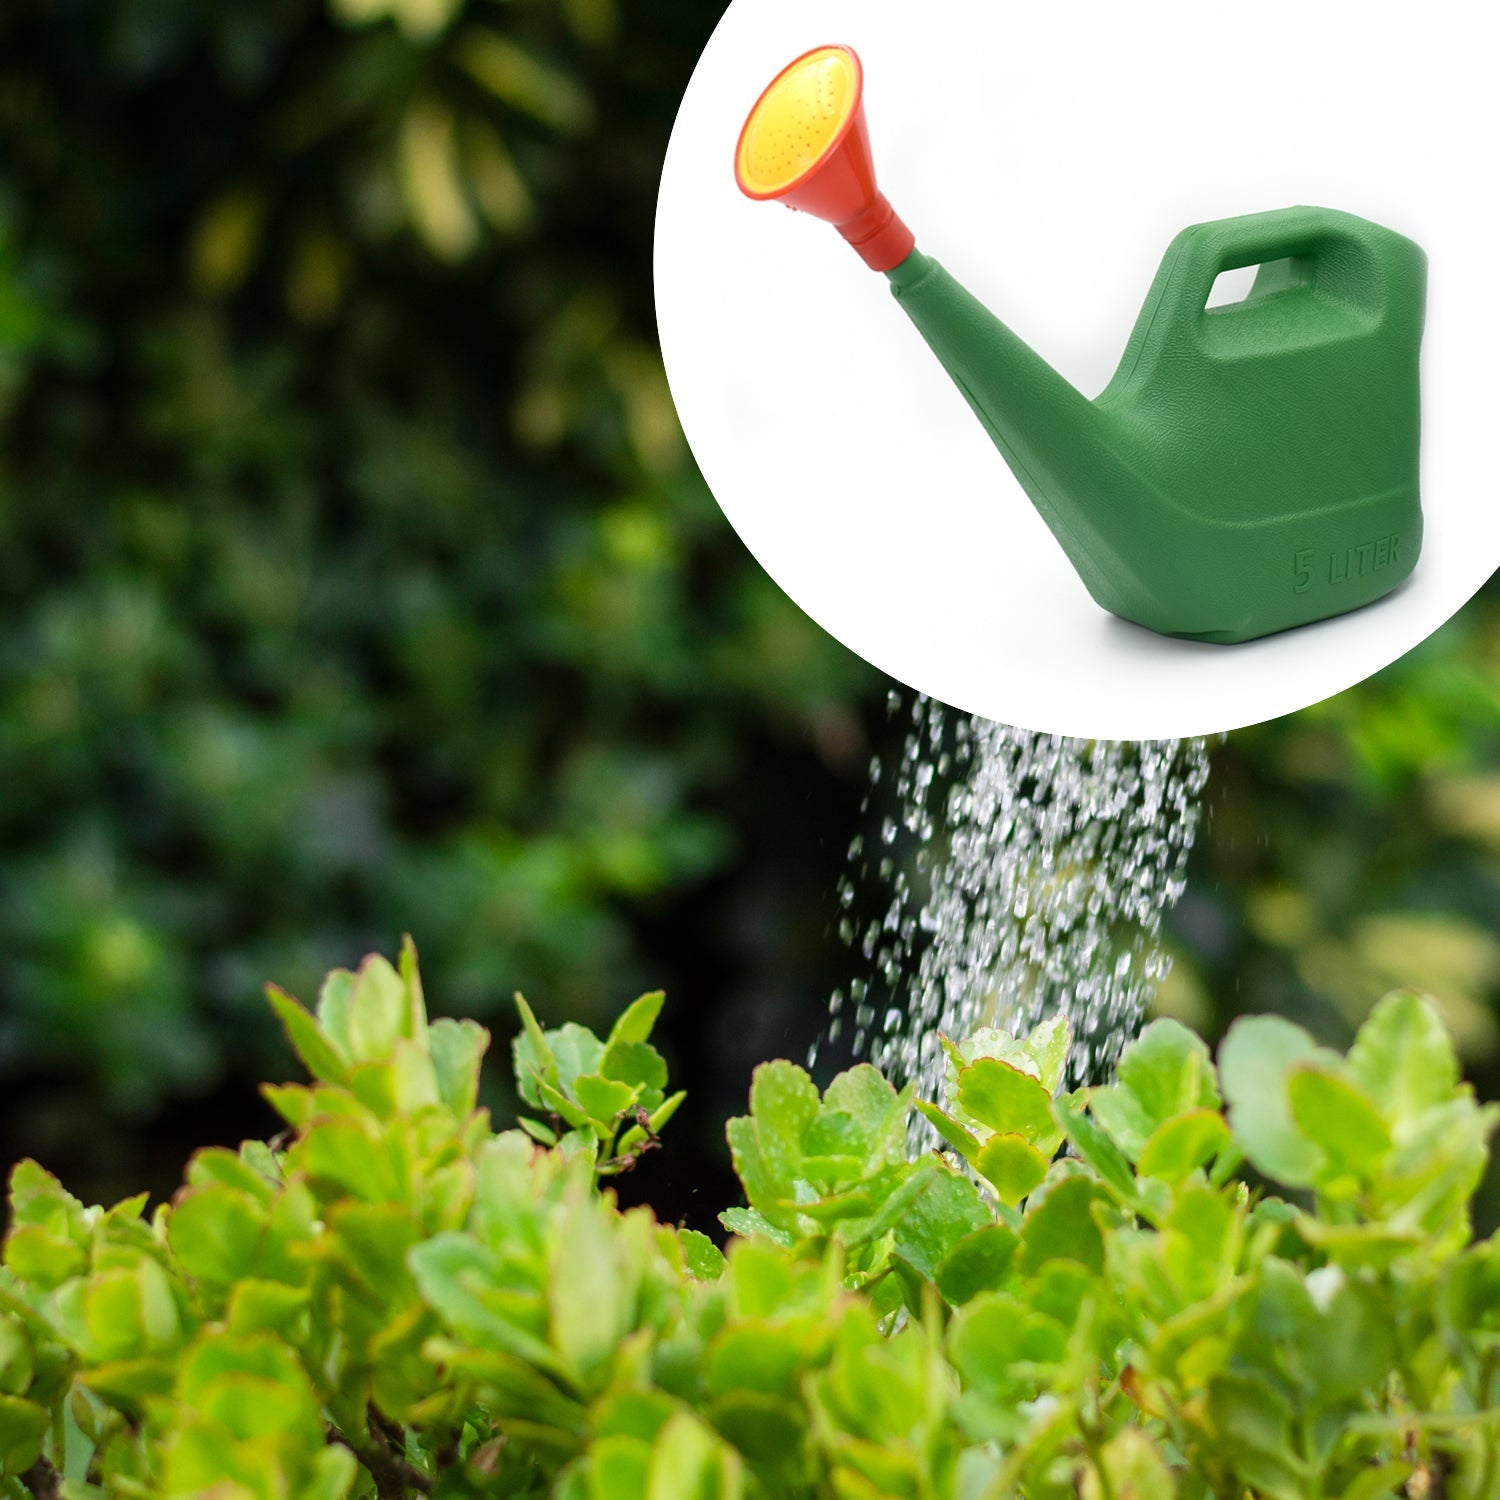 9021 Plastic Watering Can Water Sprayer Sprinkler for Plants Indoor Outdoor Gardening, 5 LTR freeshipping - DeoDap